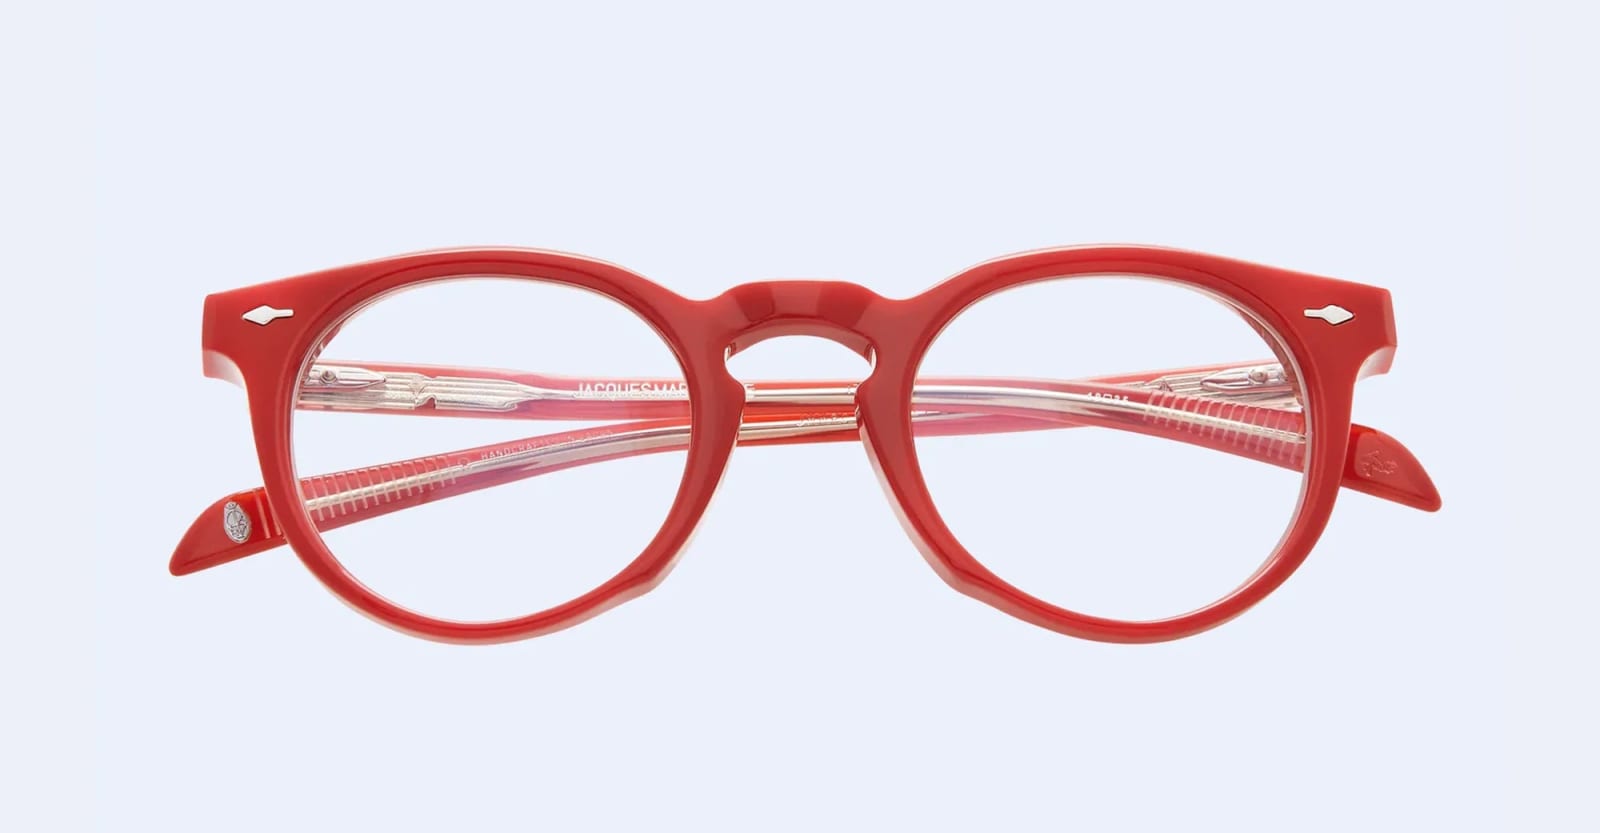 Percier - Vermillion Glasses